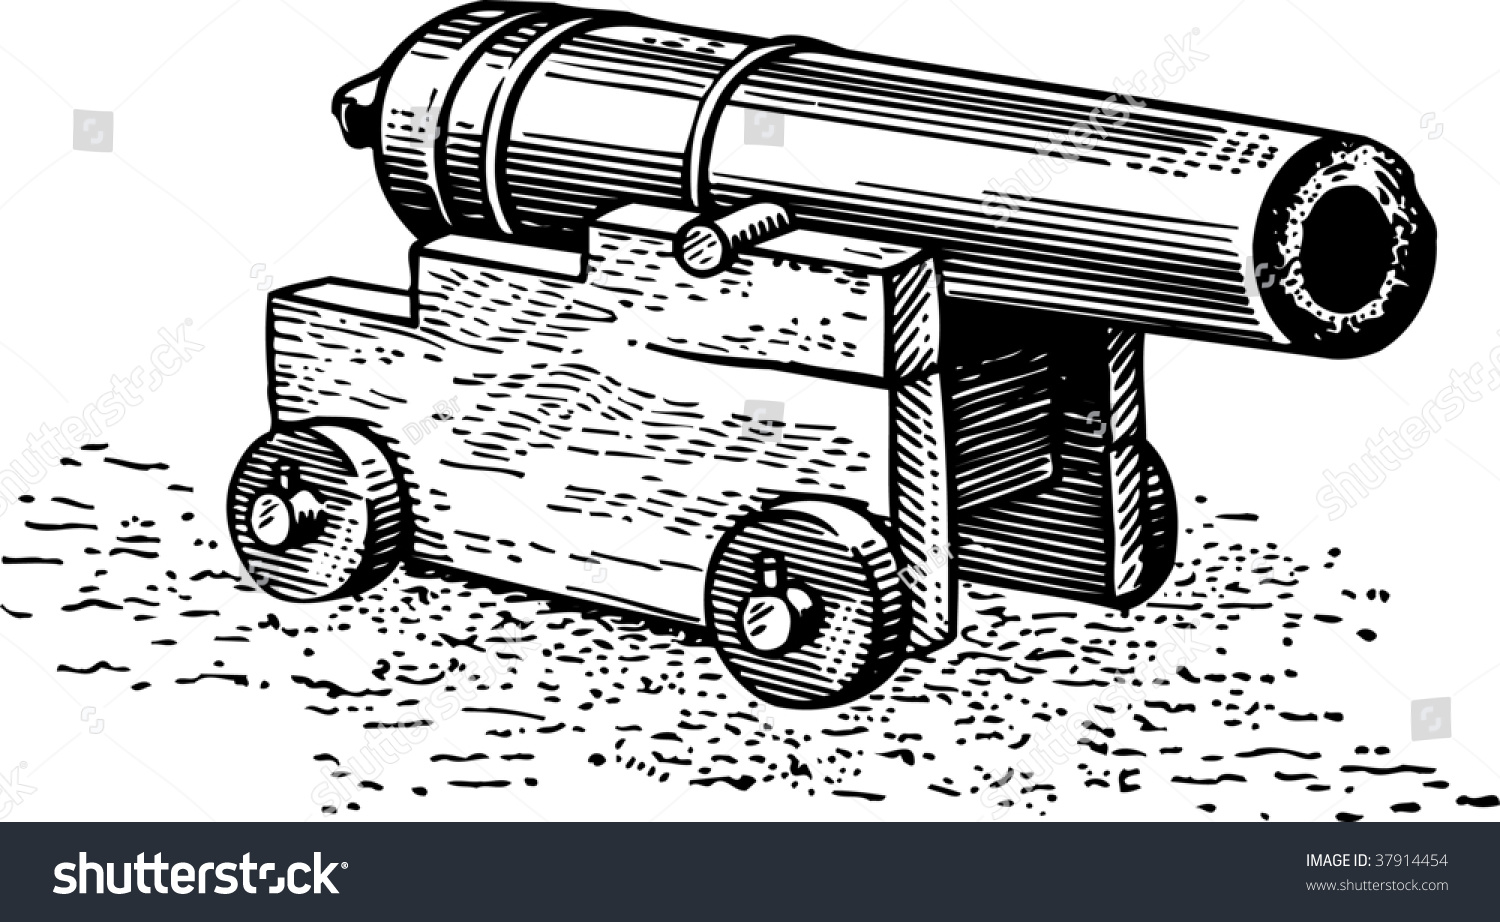 Cannon Stock Vector Illustration 37914454 : Shutterstock